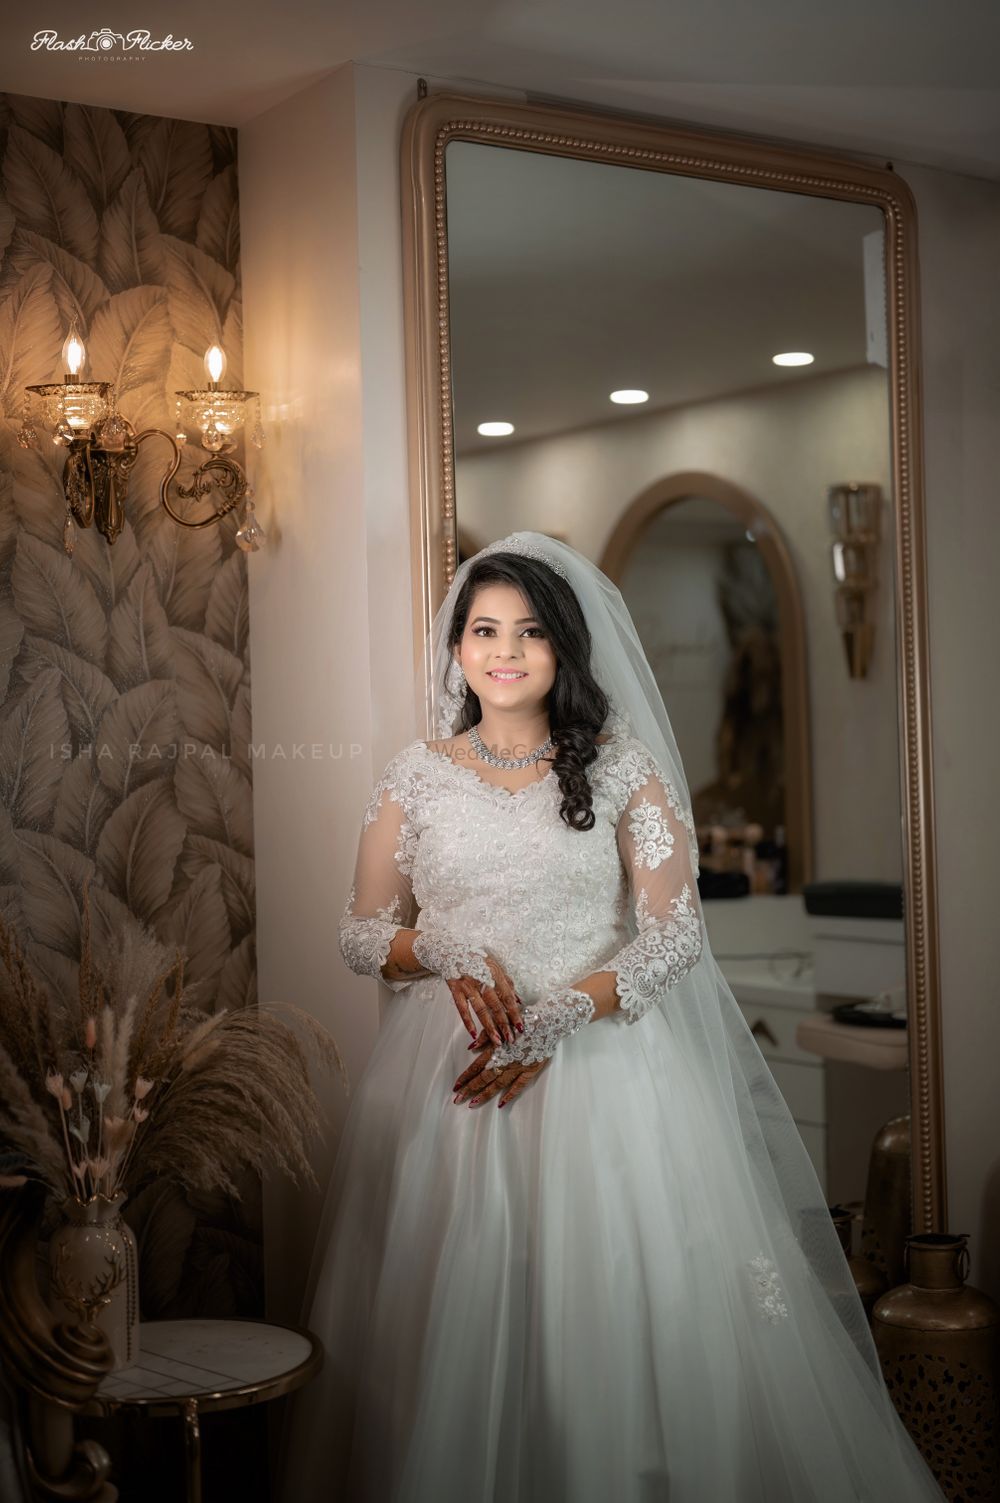 Photo From Christian Brides - By Isha Rajpal MUA